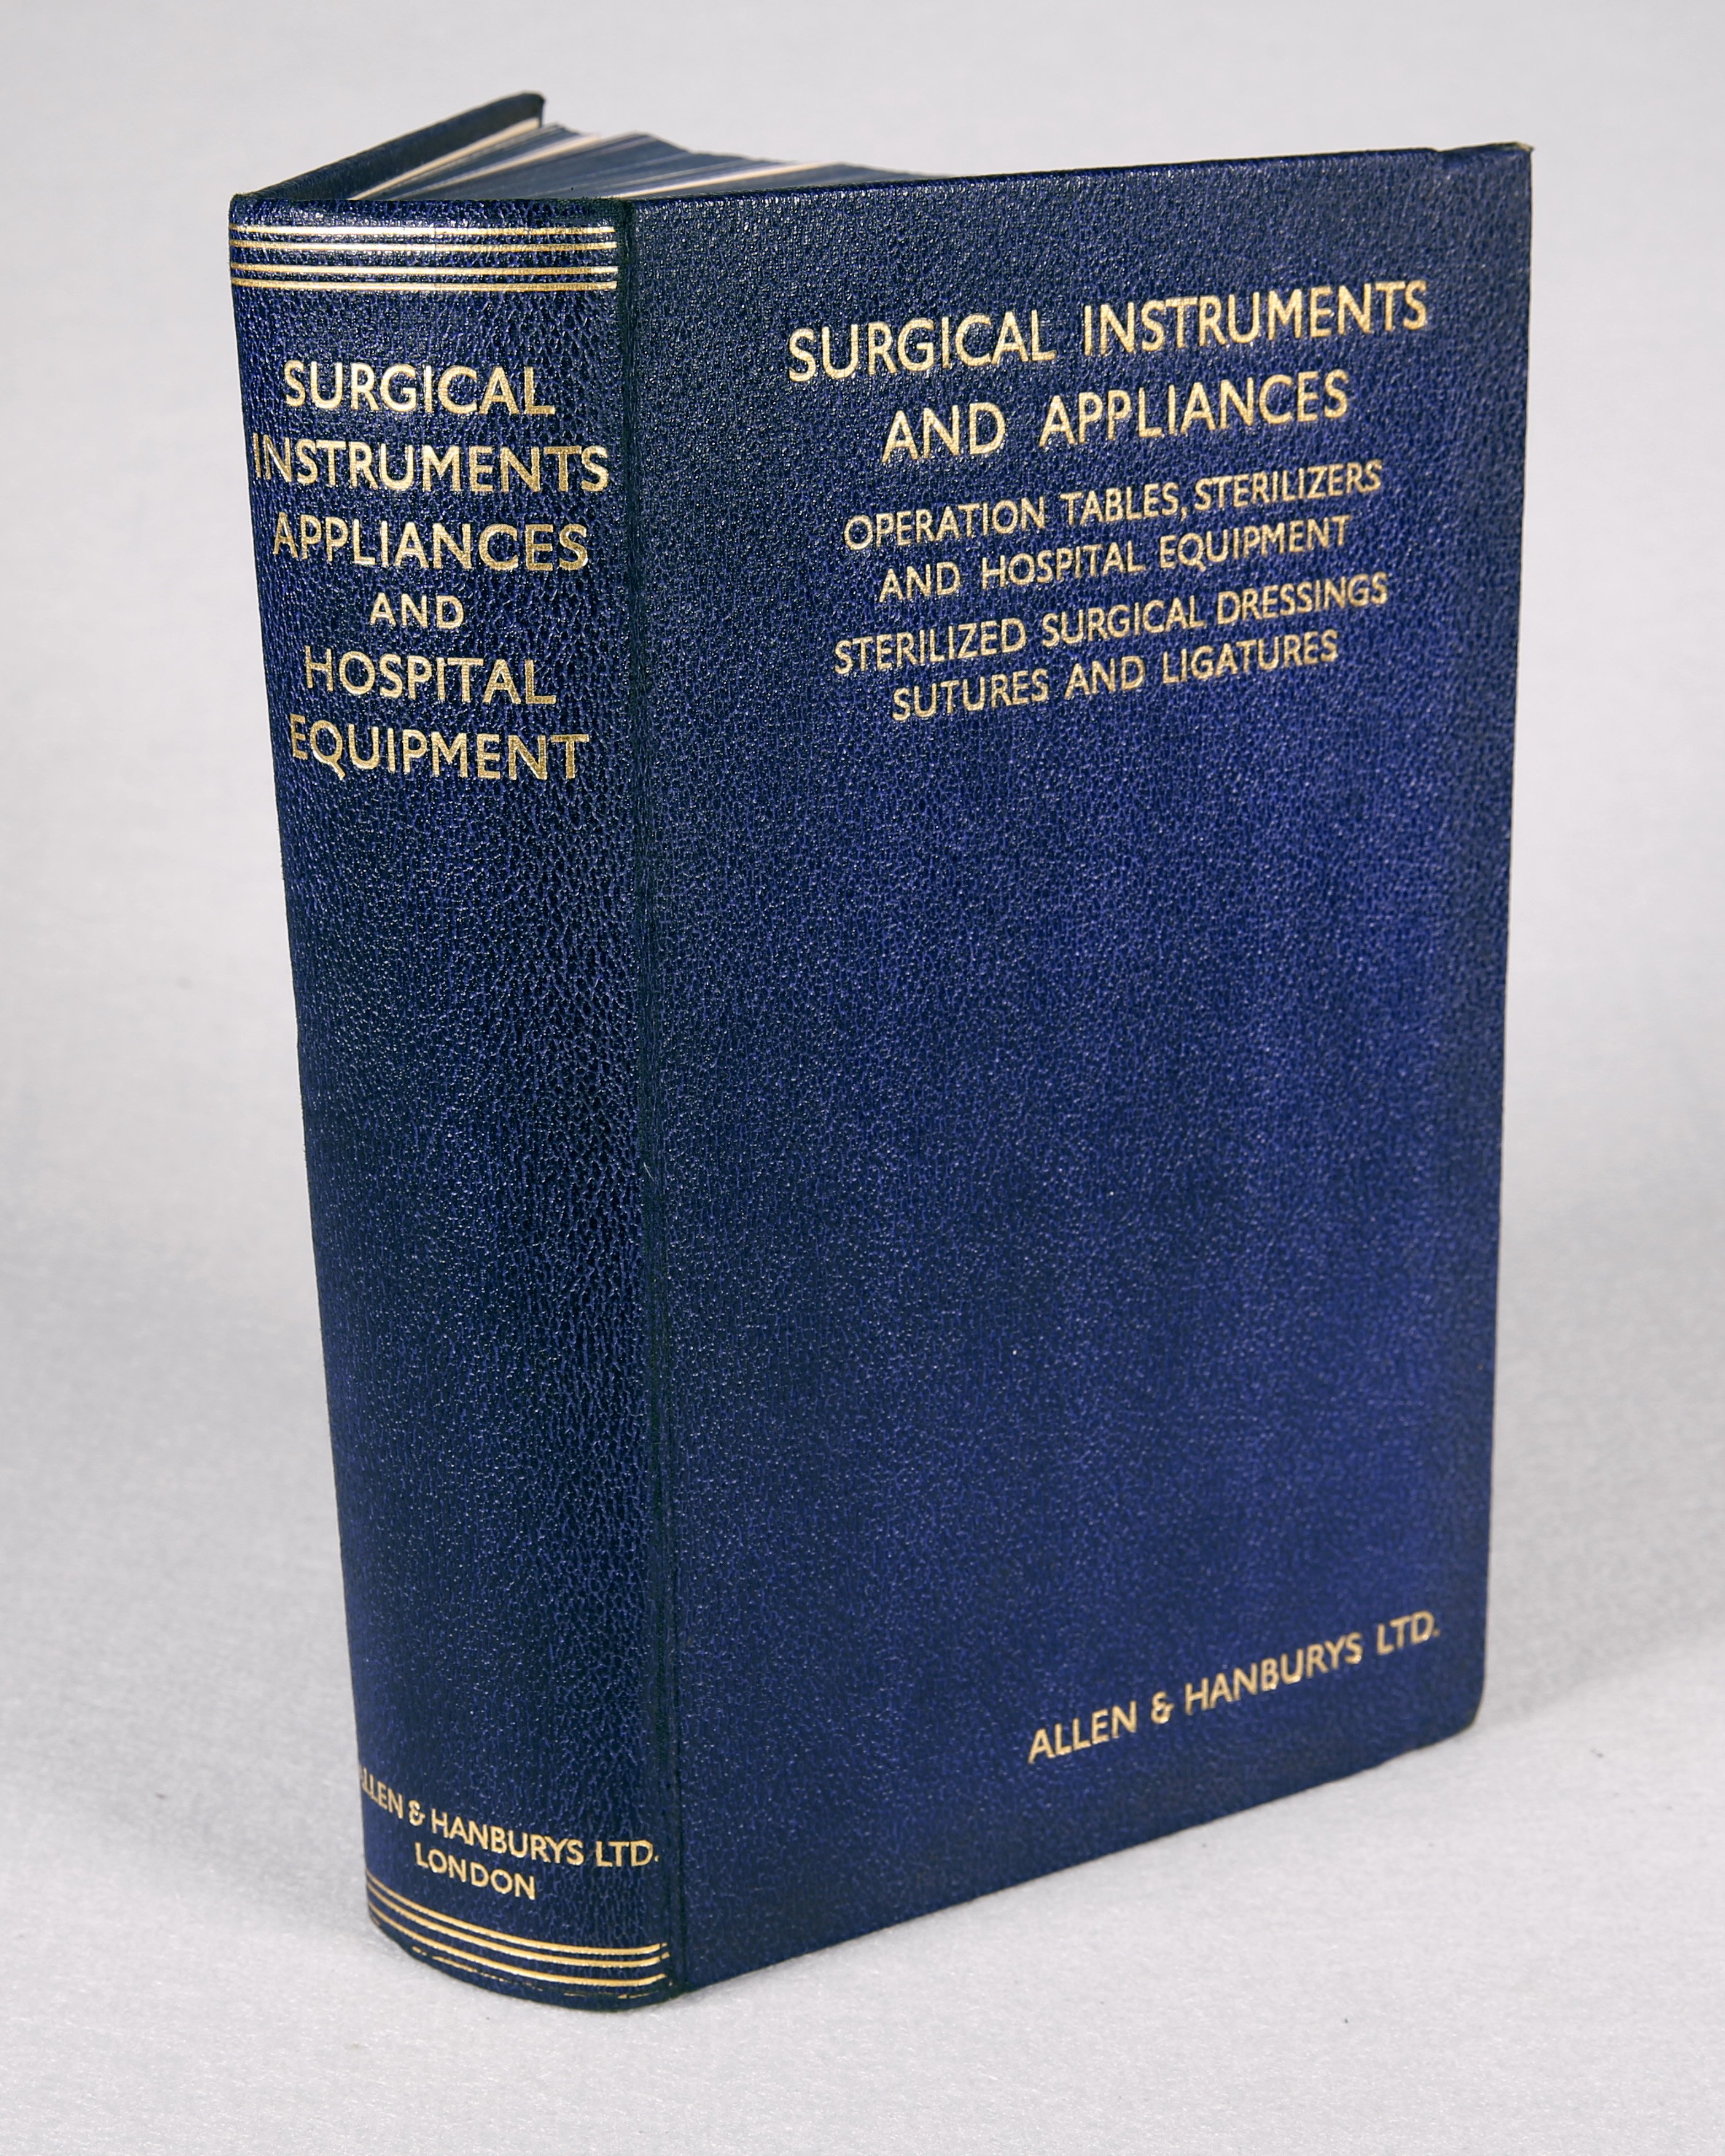 Allen & Hanburys Ltd., Surgical Instruments and Appliances (Wilhelm-Fabry-Museum CC BY-NC-SA)